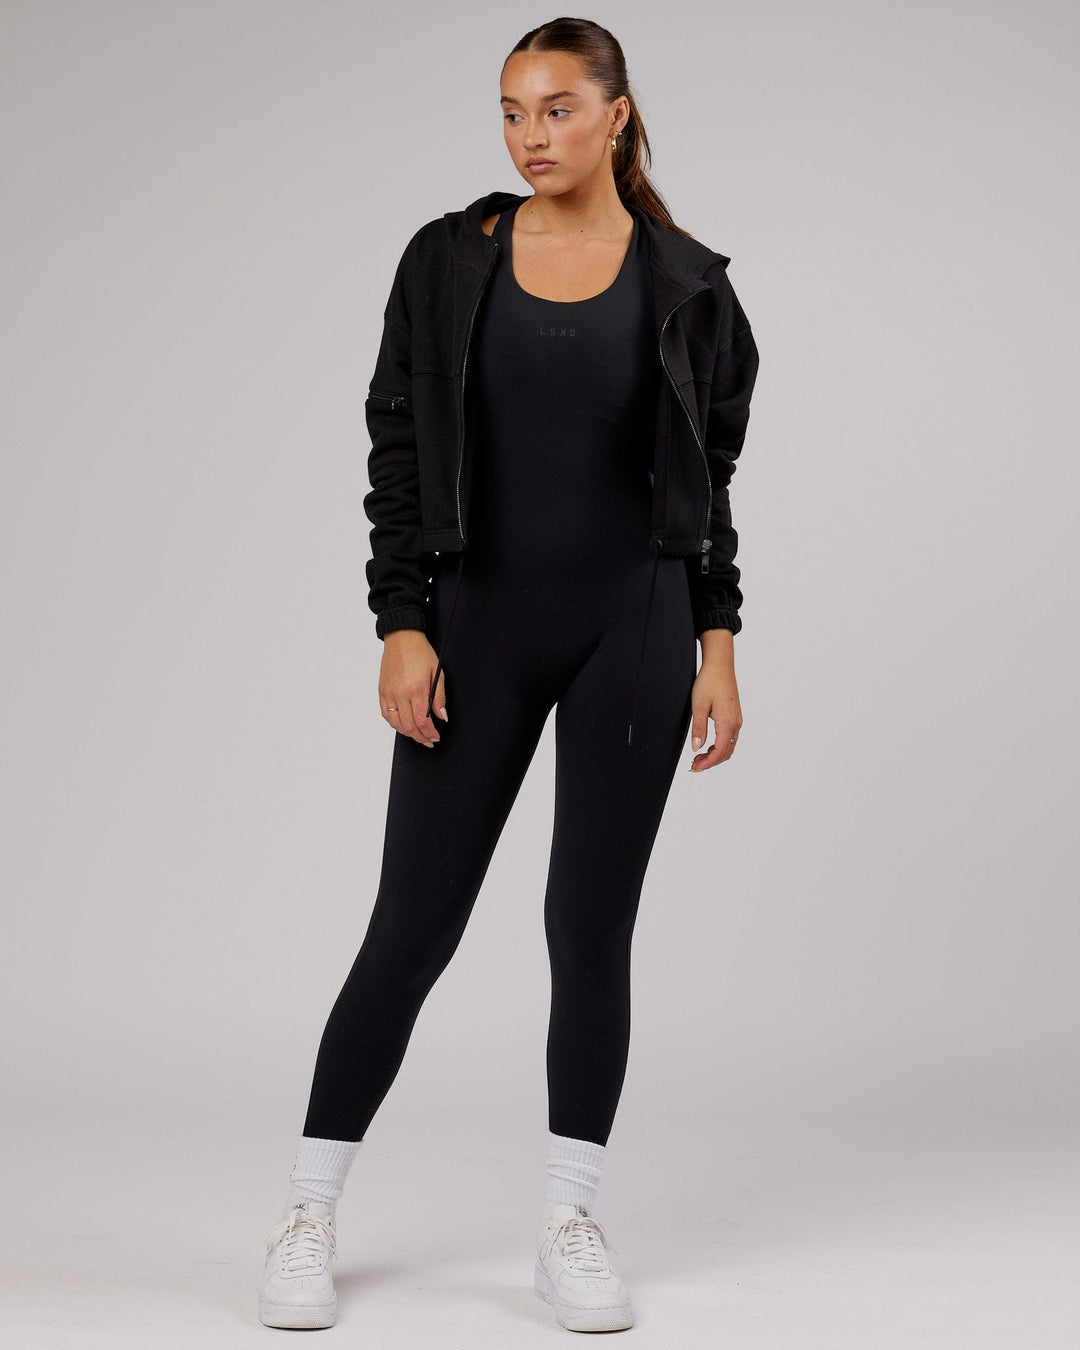 Woman wearing Full Length Bodysuit - Black